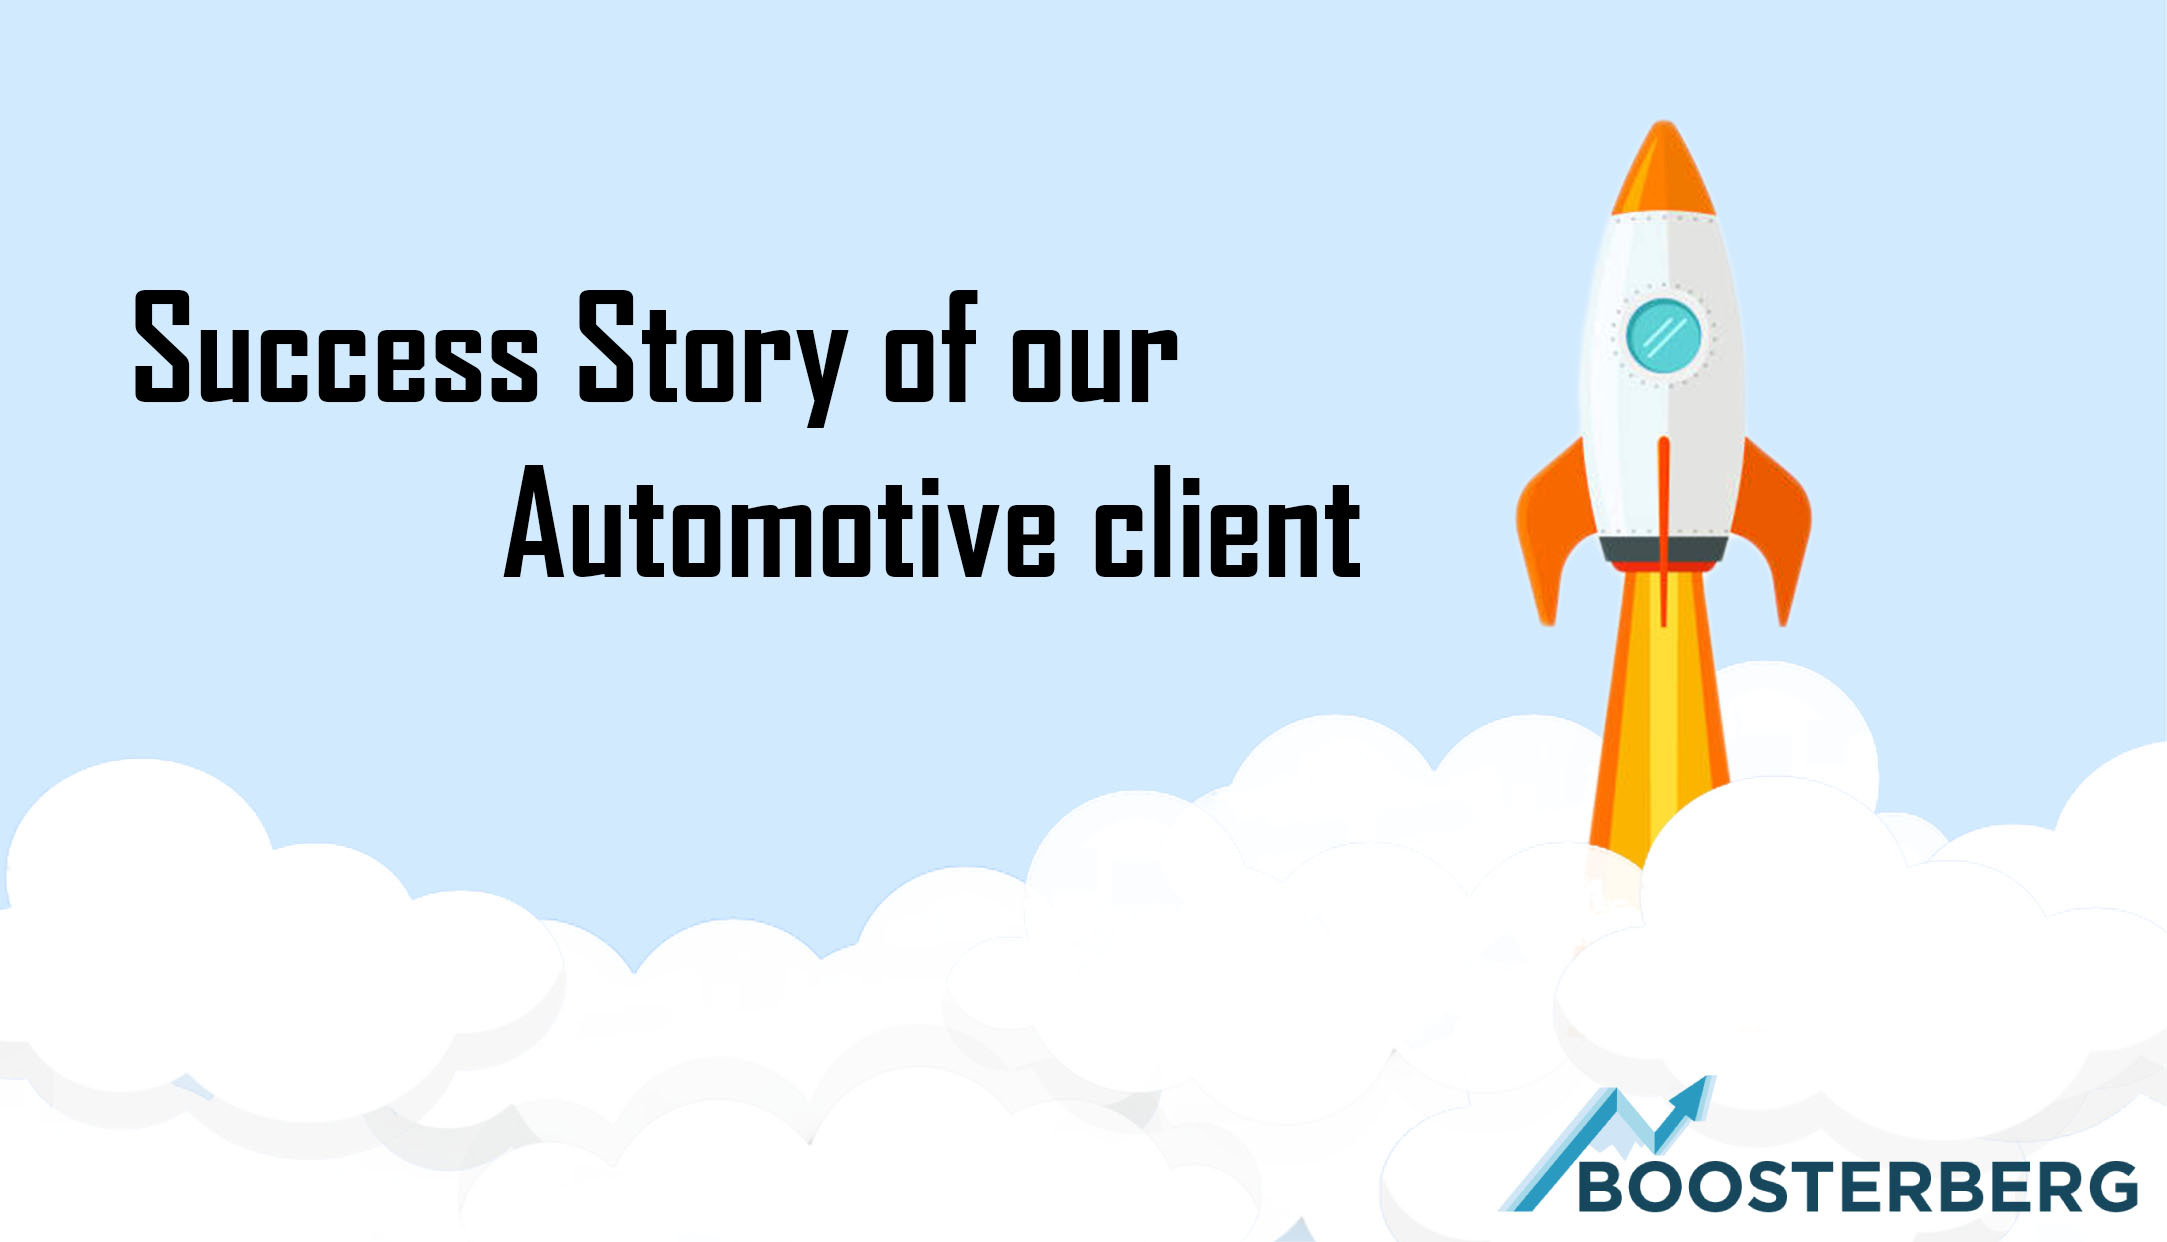 Success story: A car dealership’s social media growth